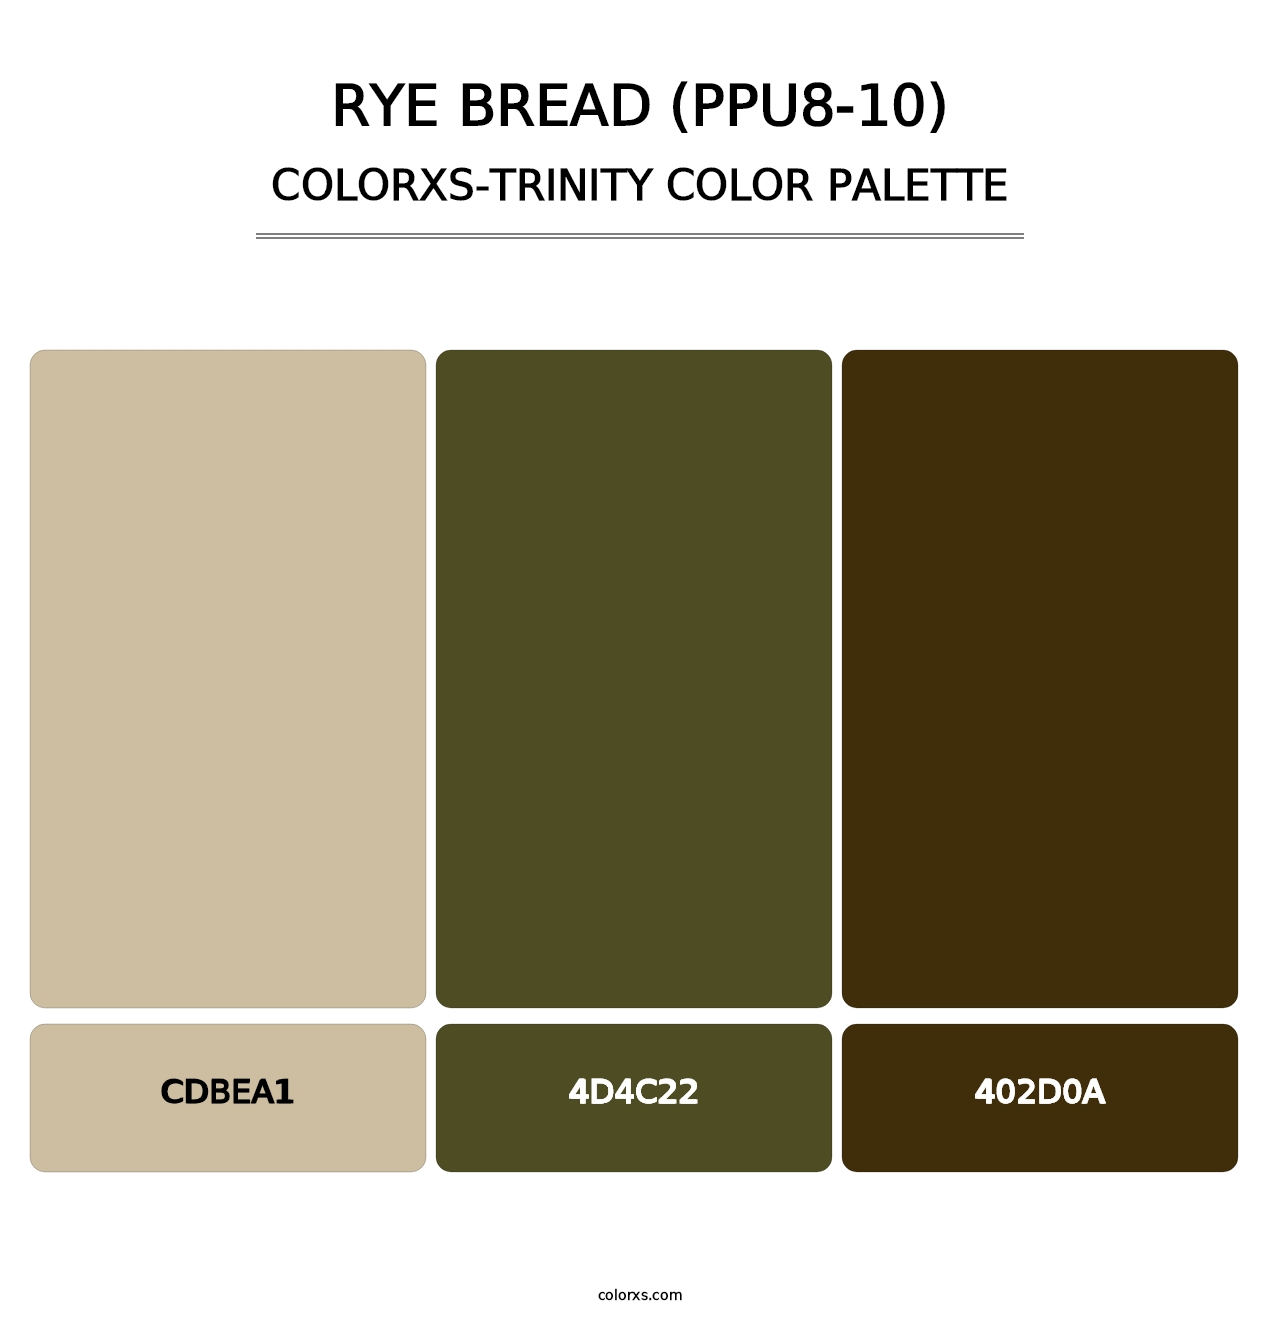 Rye Bread (PPU8-10) - Colorxs Trinity Palette